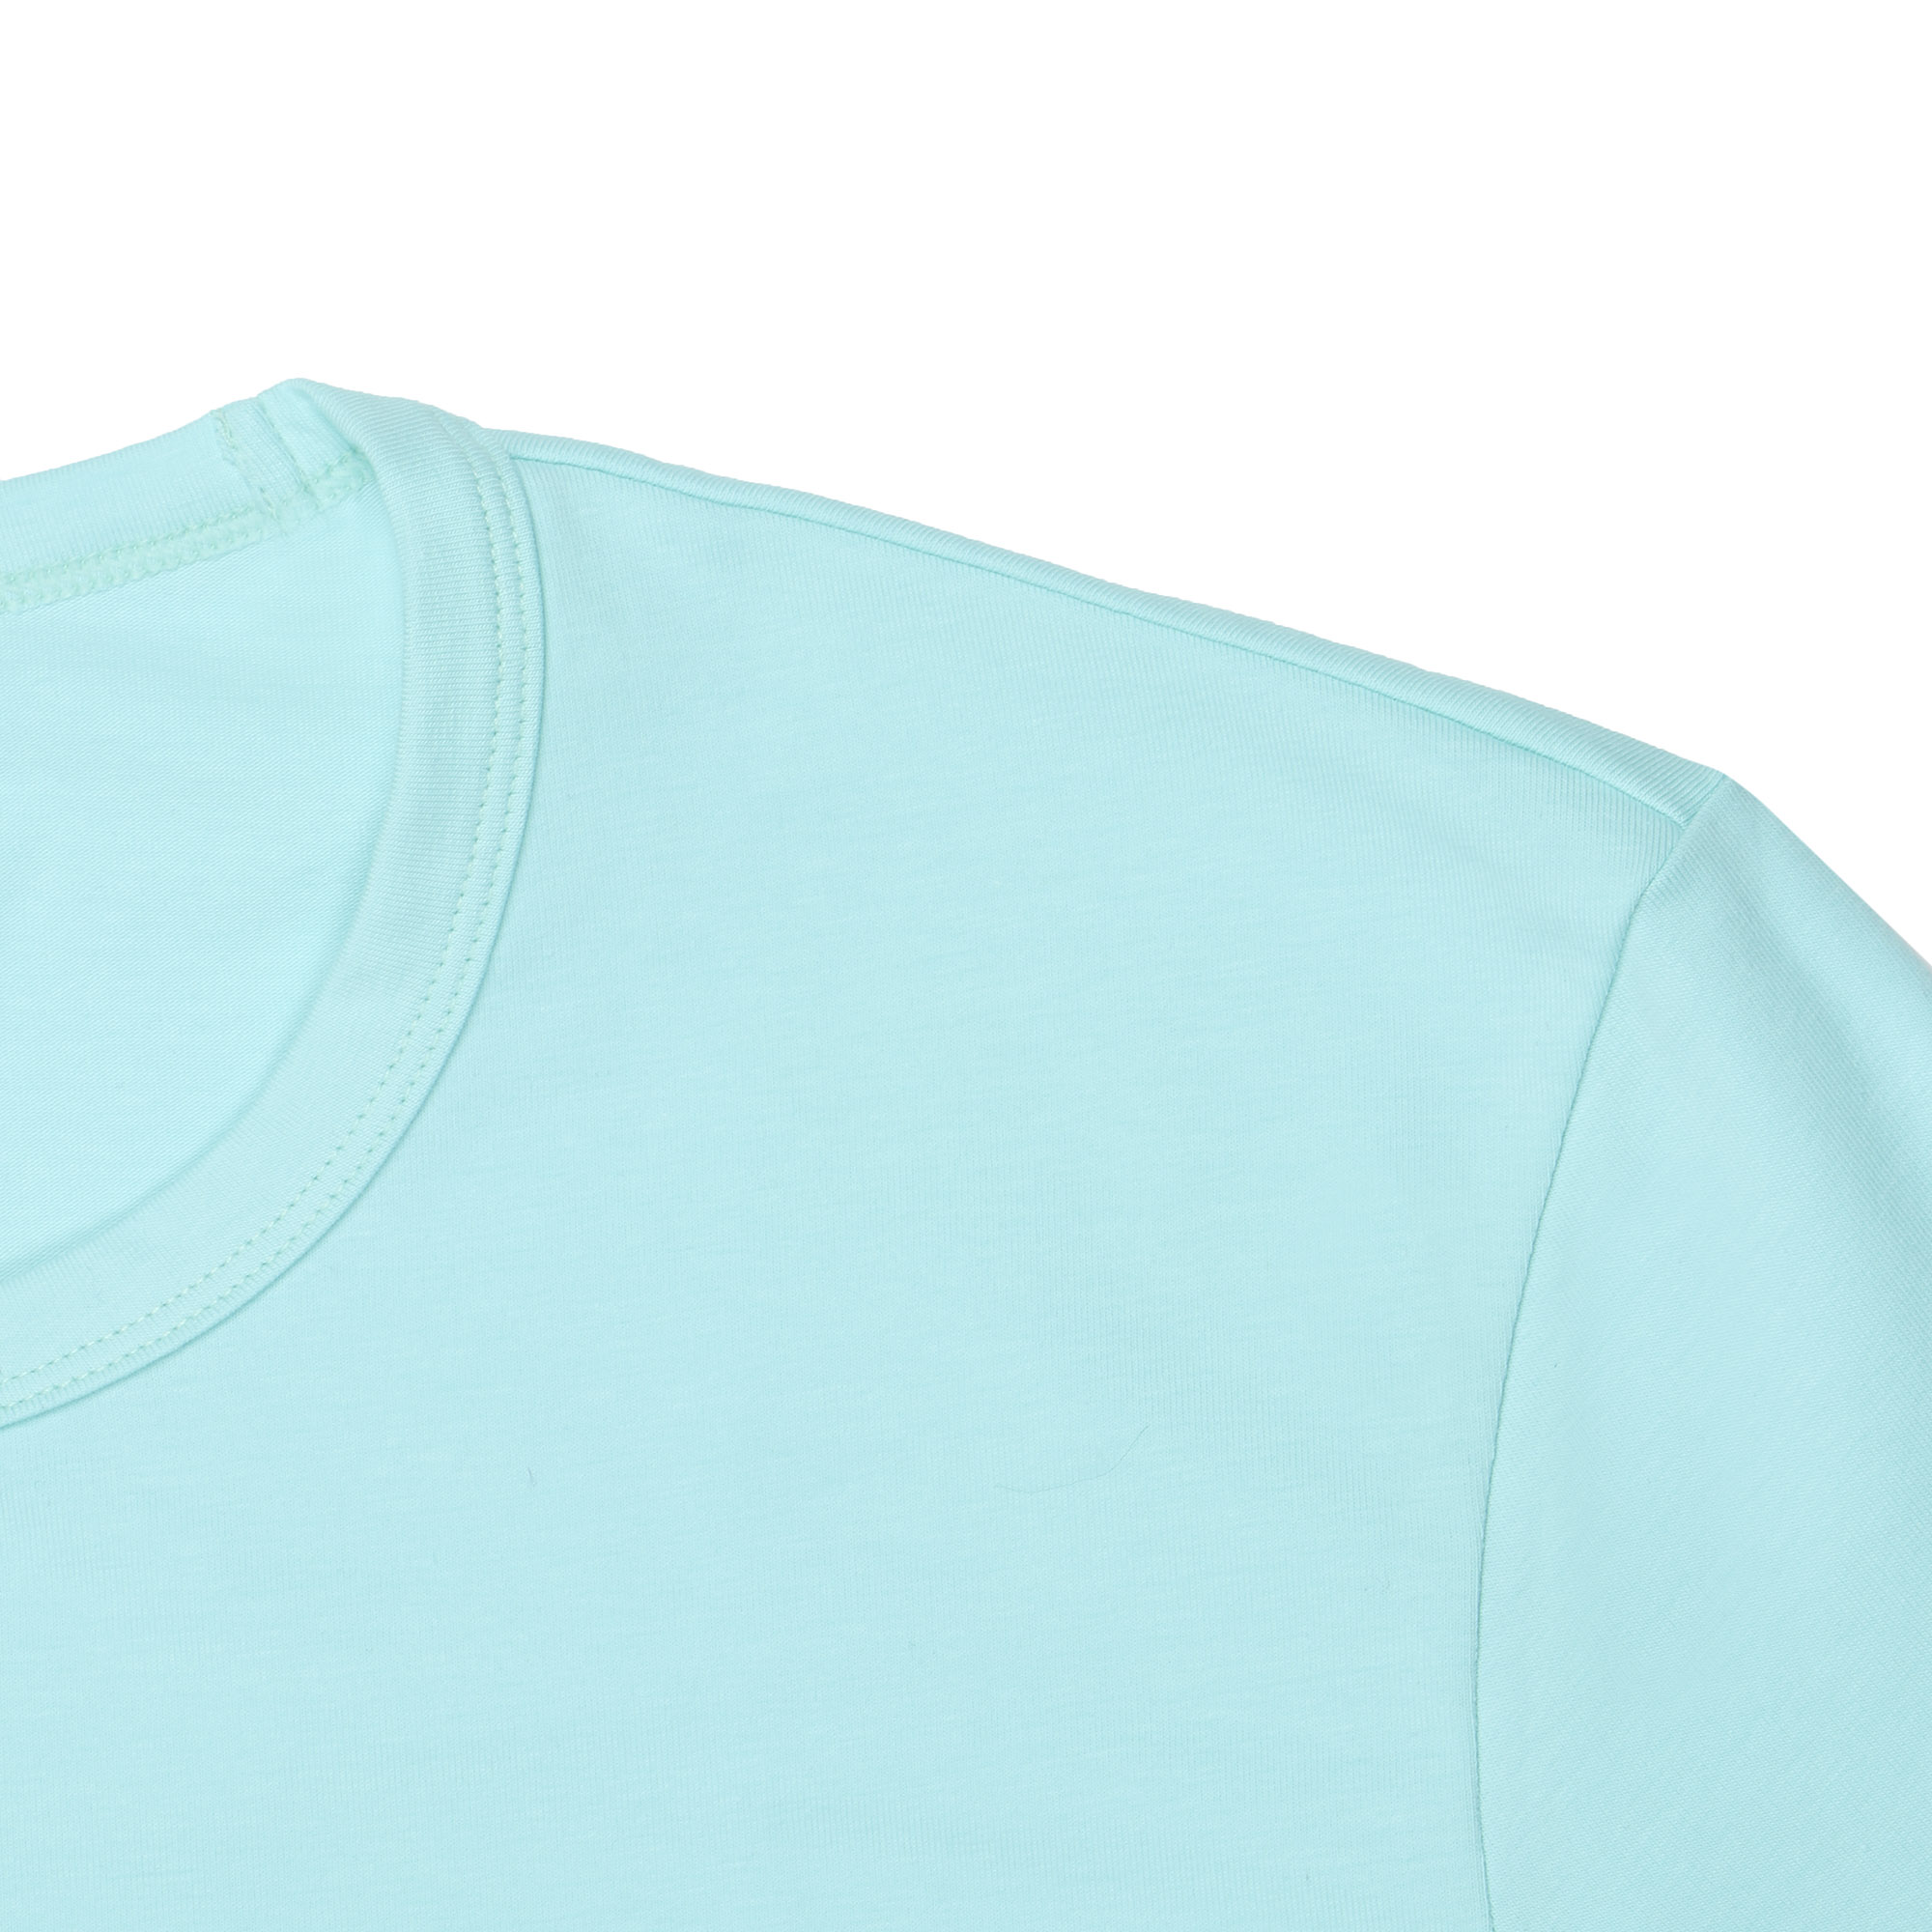 Мужская футболка Pantelemone MF-914 46 ментоловая, цвет ментоловый, размер 46 - фото 2